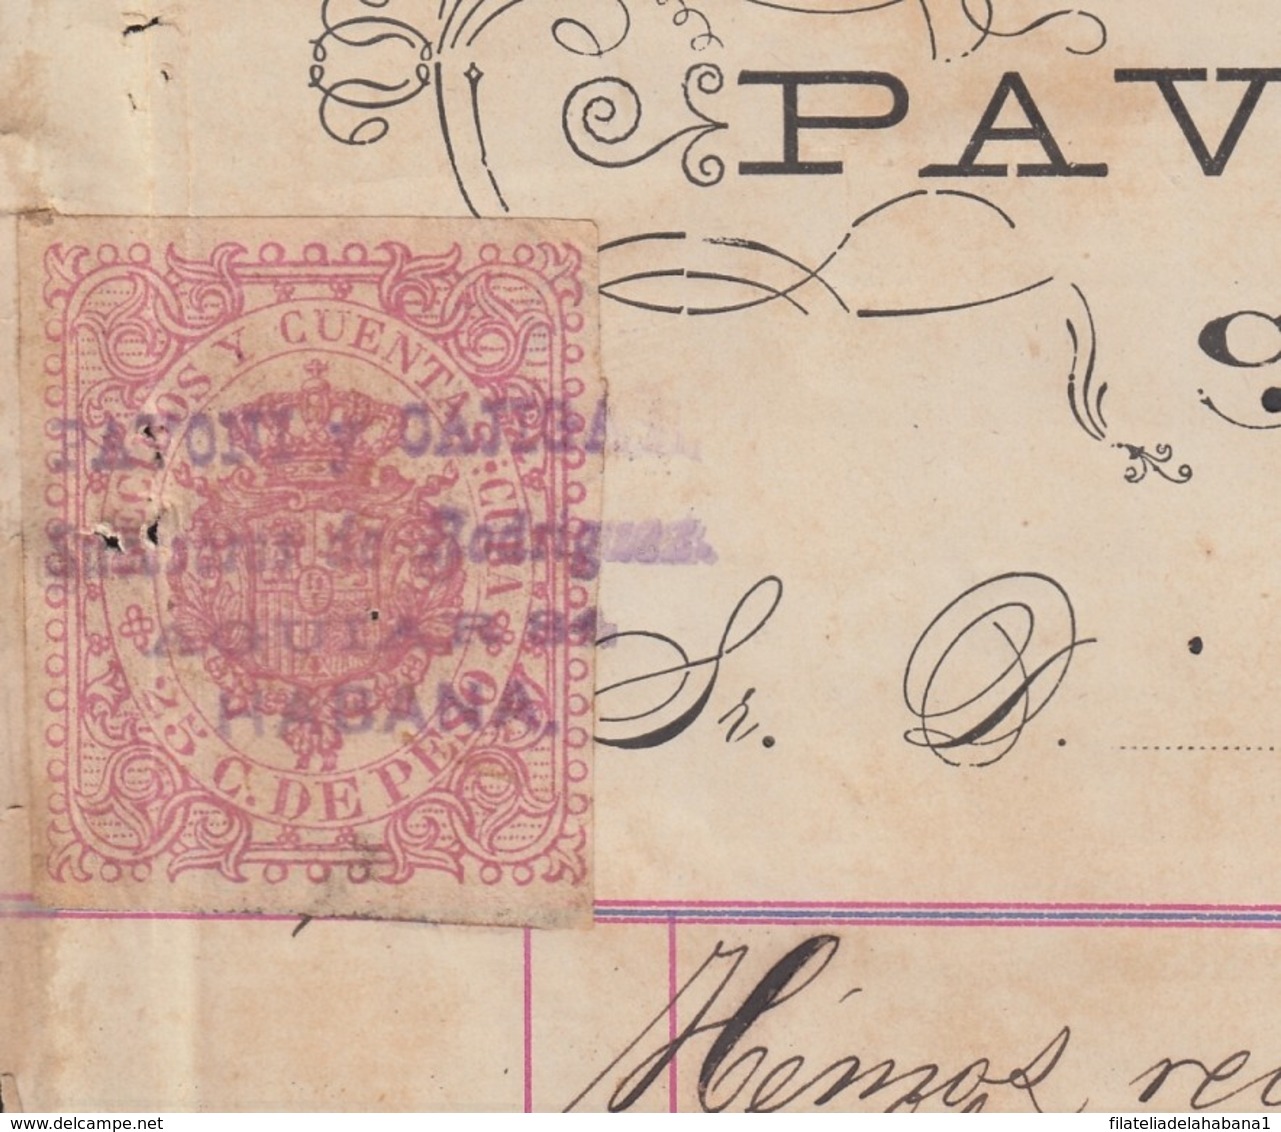 REC-134 CUBA SPAIN ESPAÑA (LG1642) RECIBOS REVENUE 1884. SASTRERIA PAVONI COSTUMES HARDWARE INVOICE. - Timbres-taxe